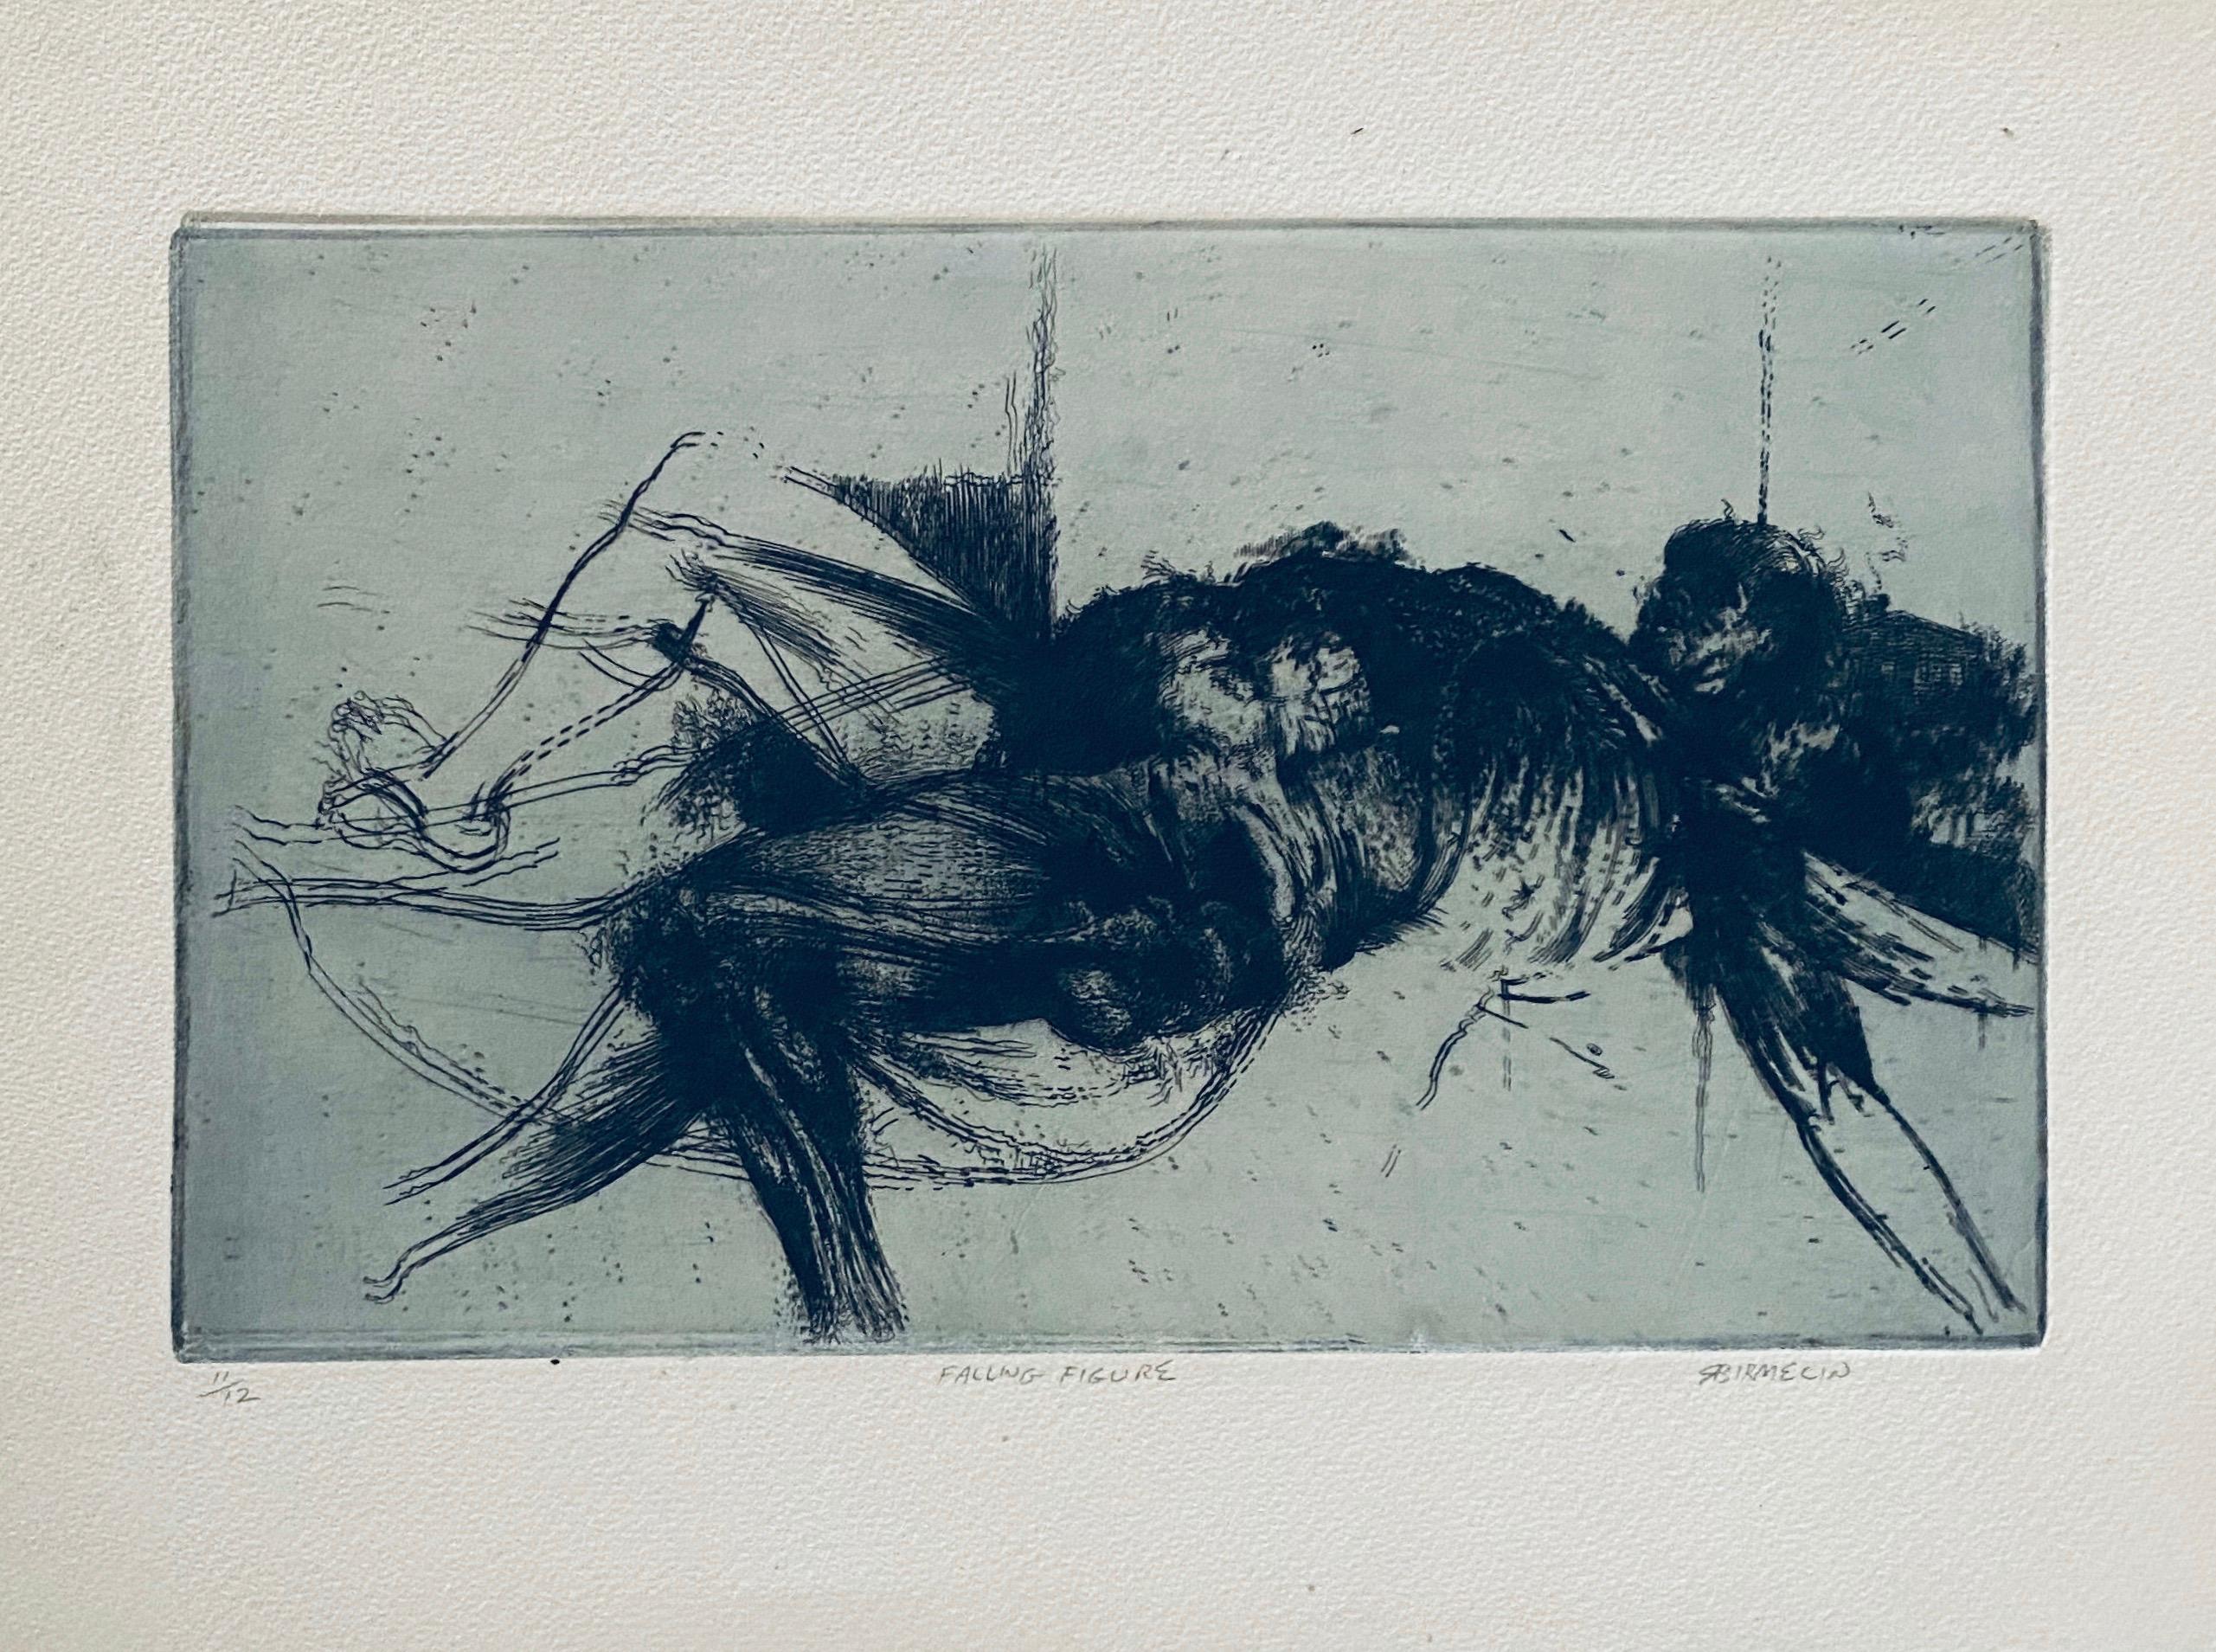 Interior Print Robert A. Birmelin - Figure tombée, gravure abstraite moderniste américaine